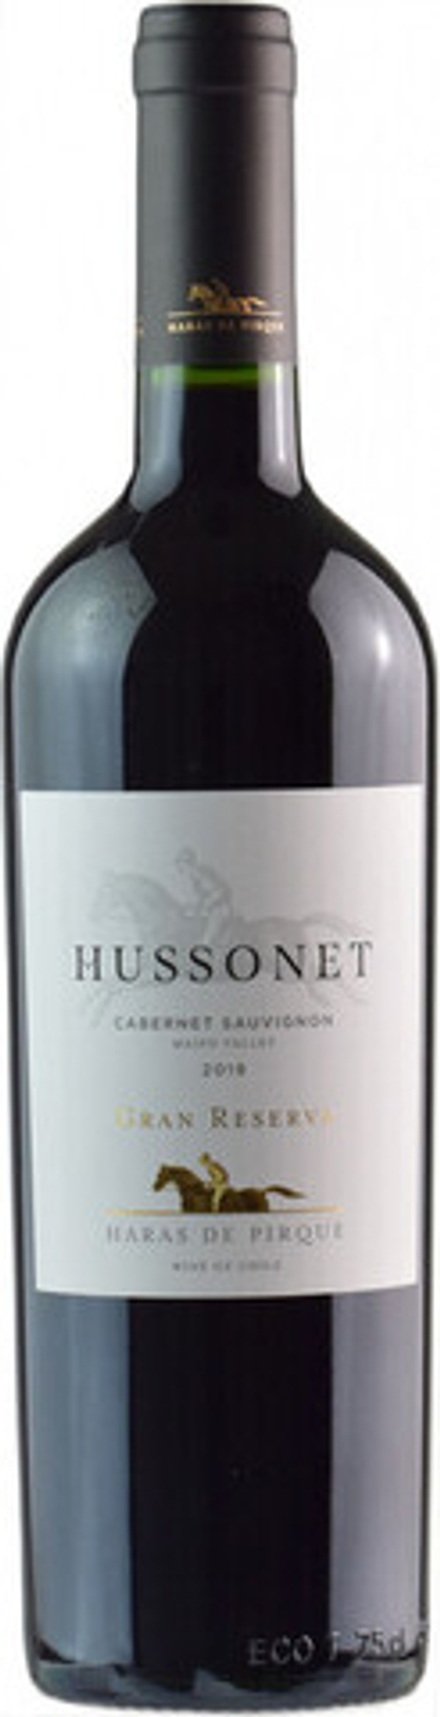 Вино Hussonet Gran Reserva, 0,75 л.